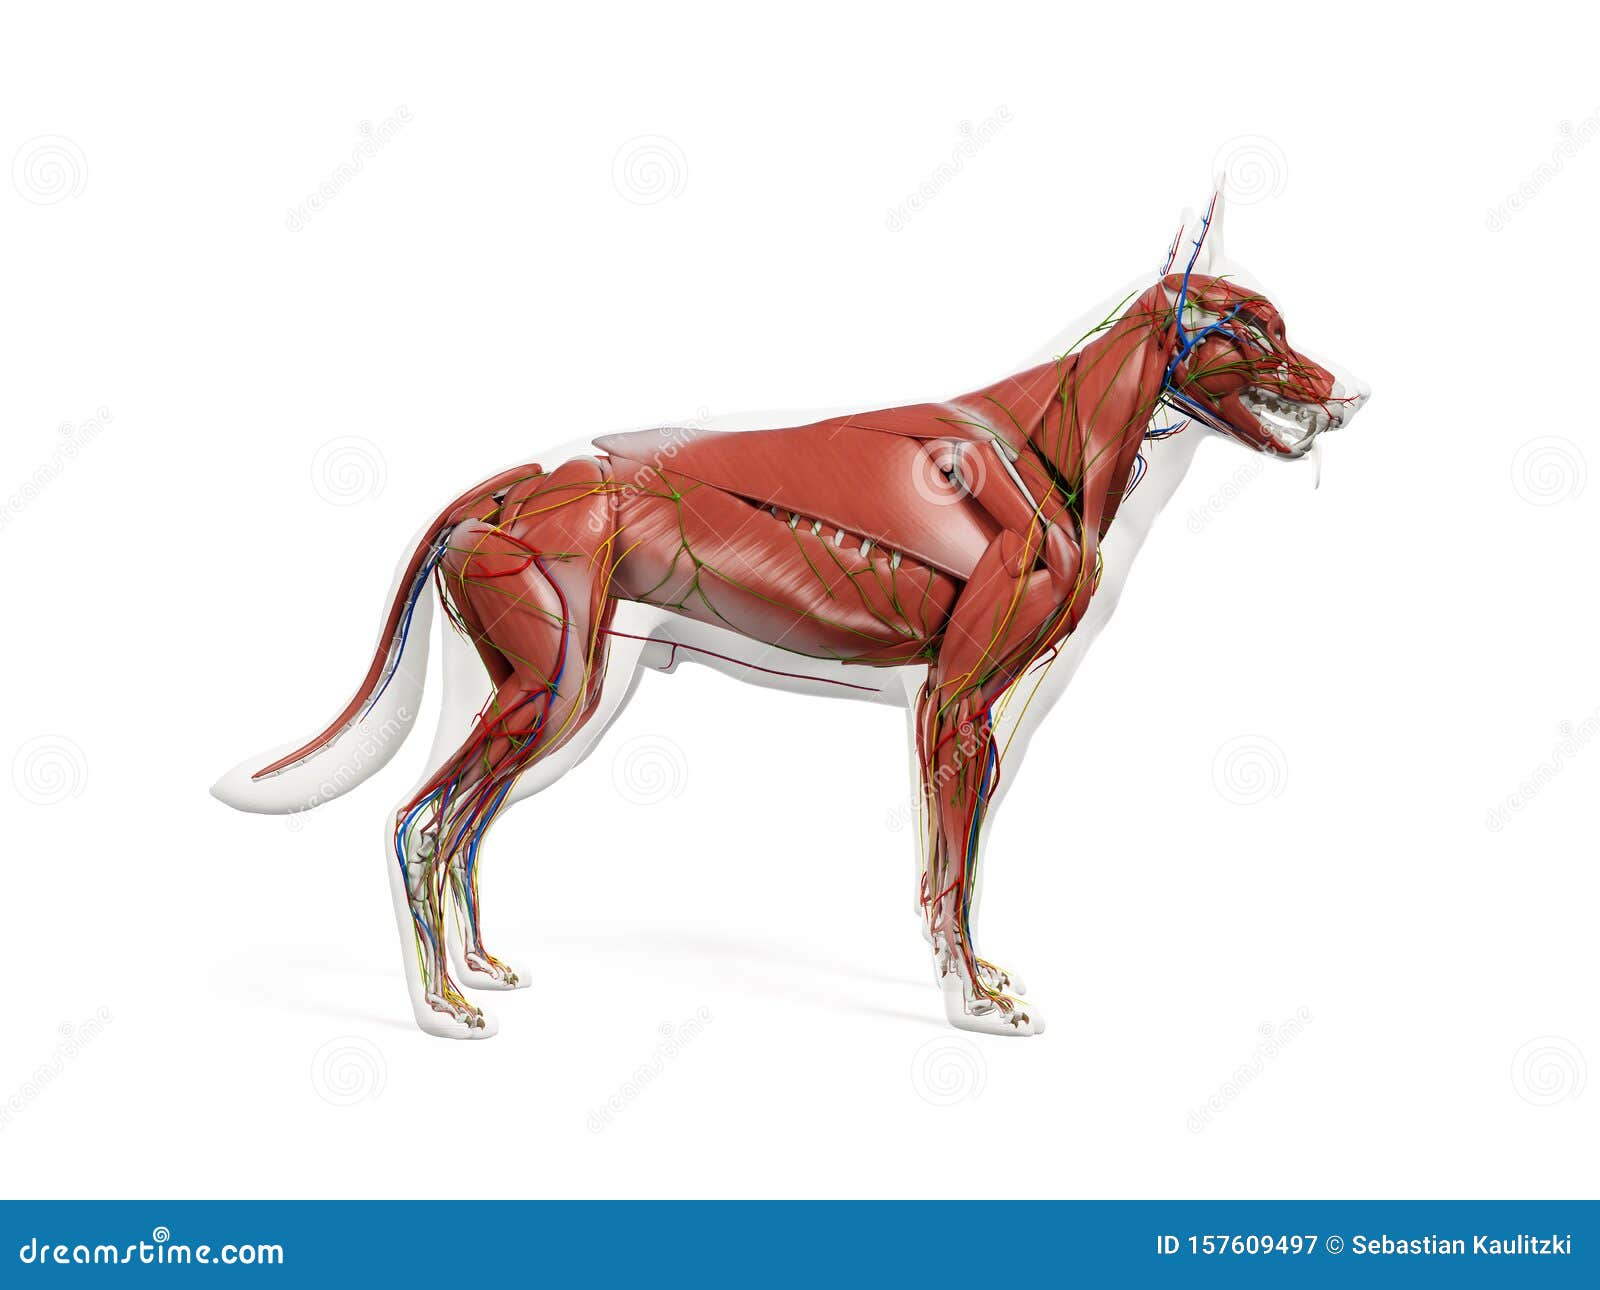 the canine anatomy